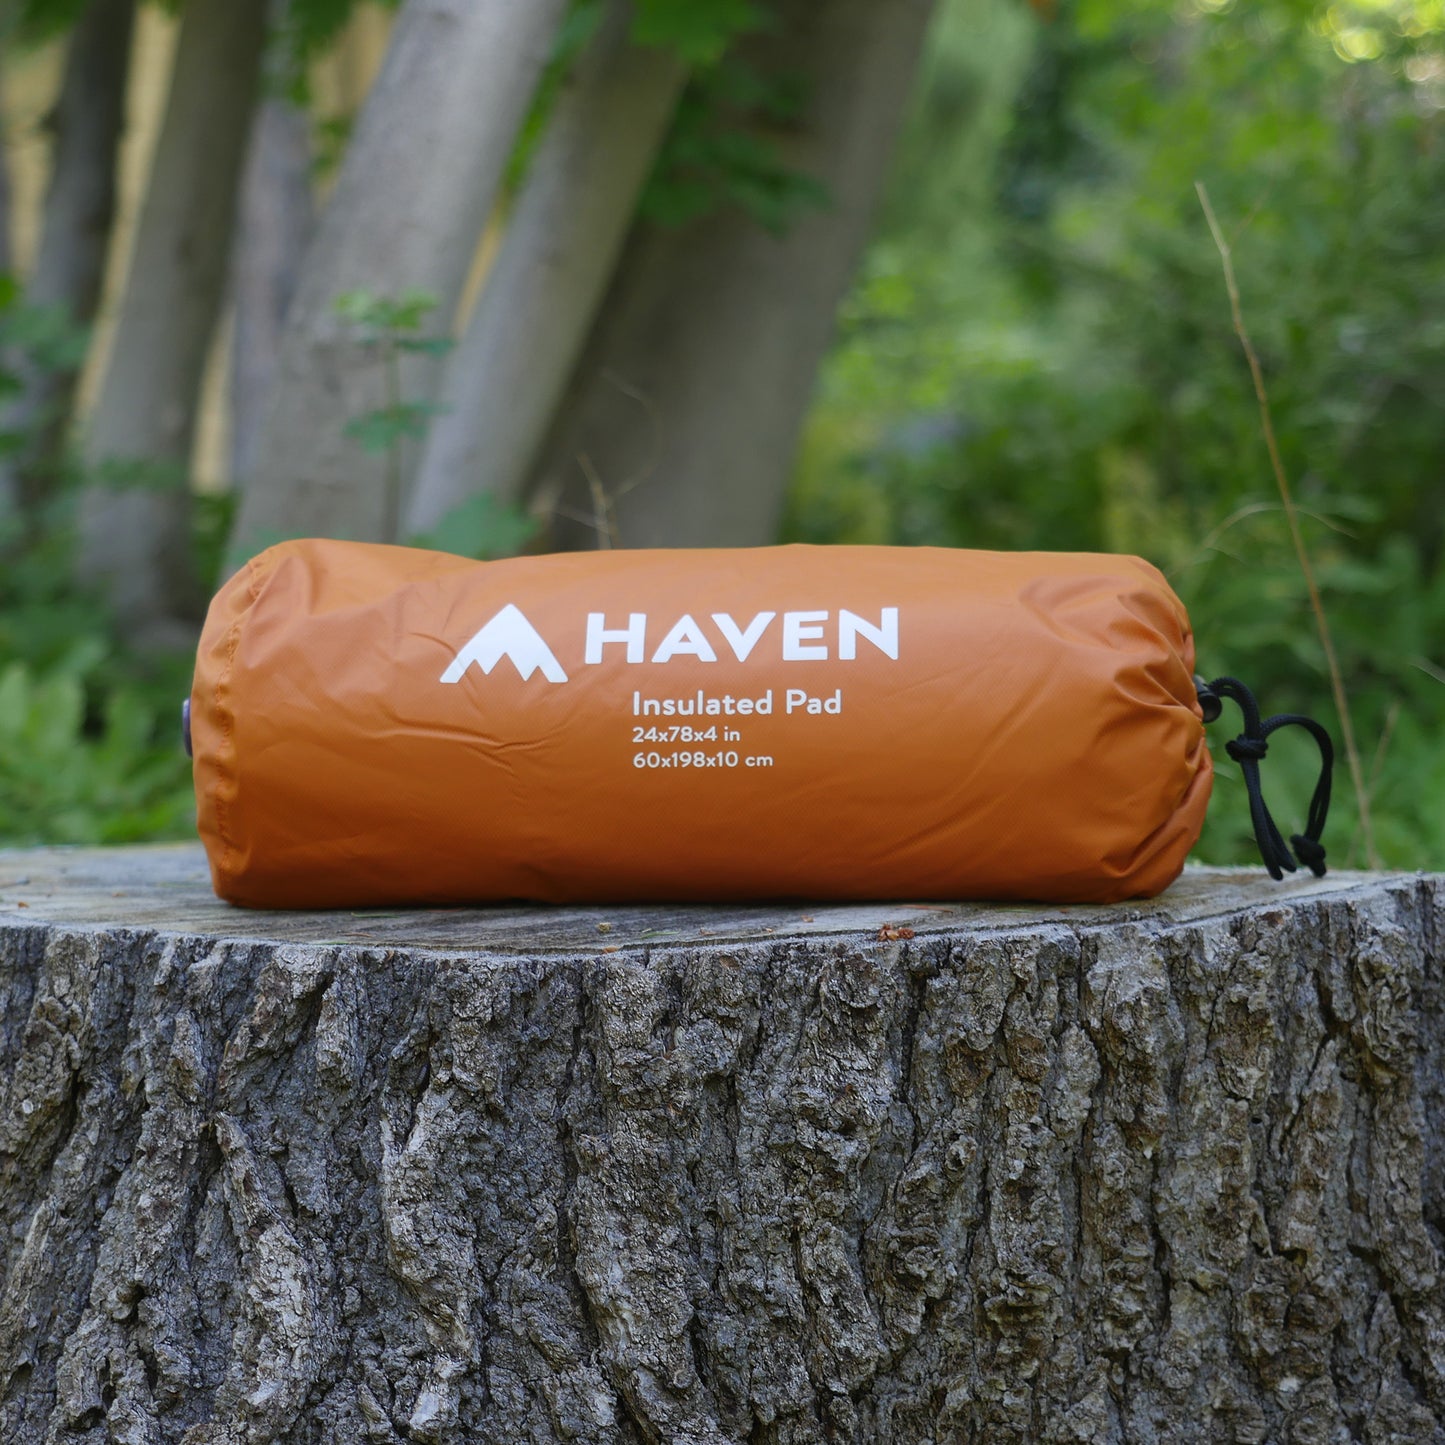 Orange insulated sleeping pad for camping hammock